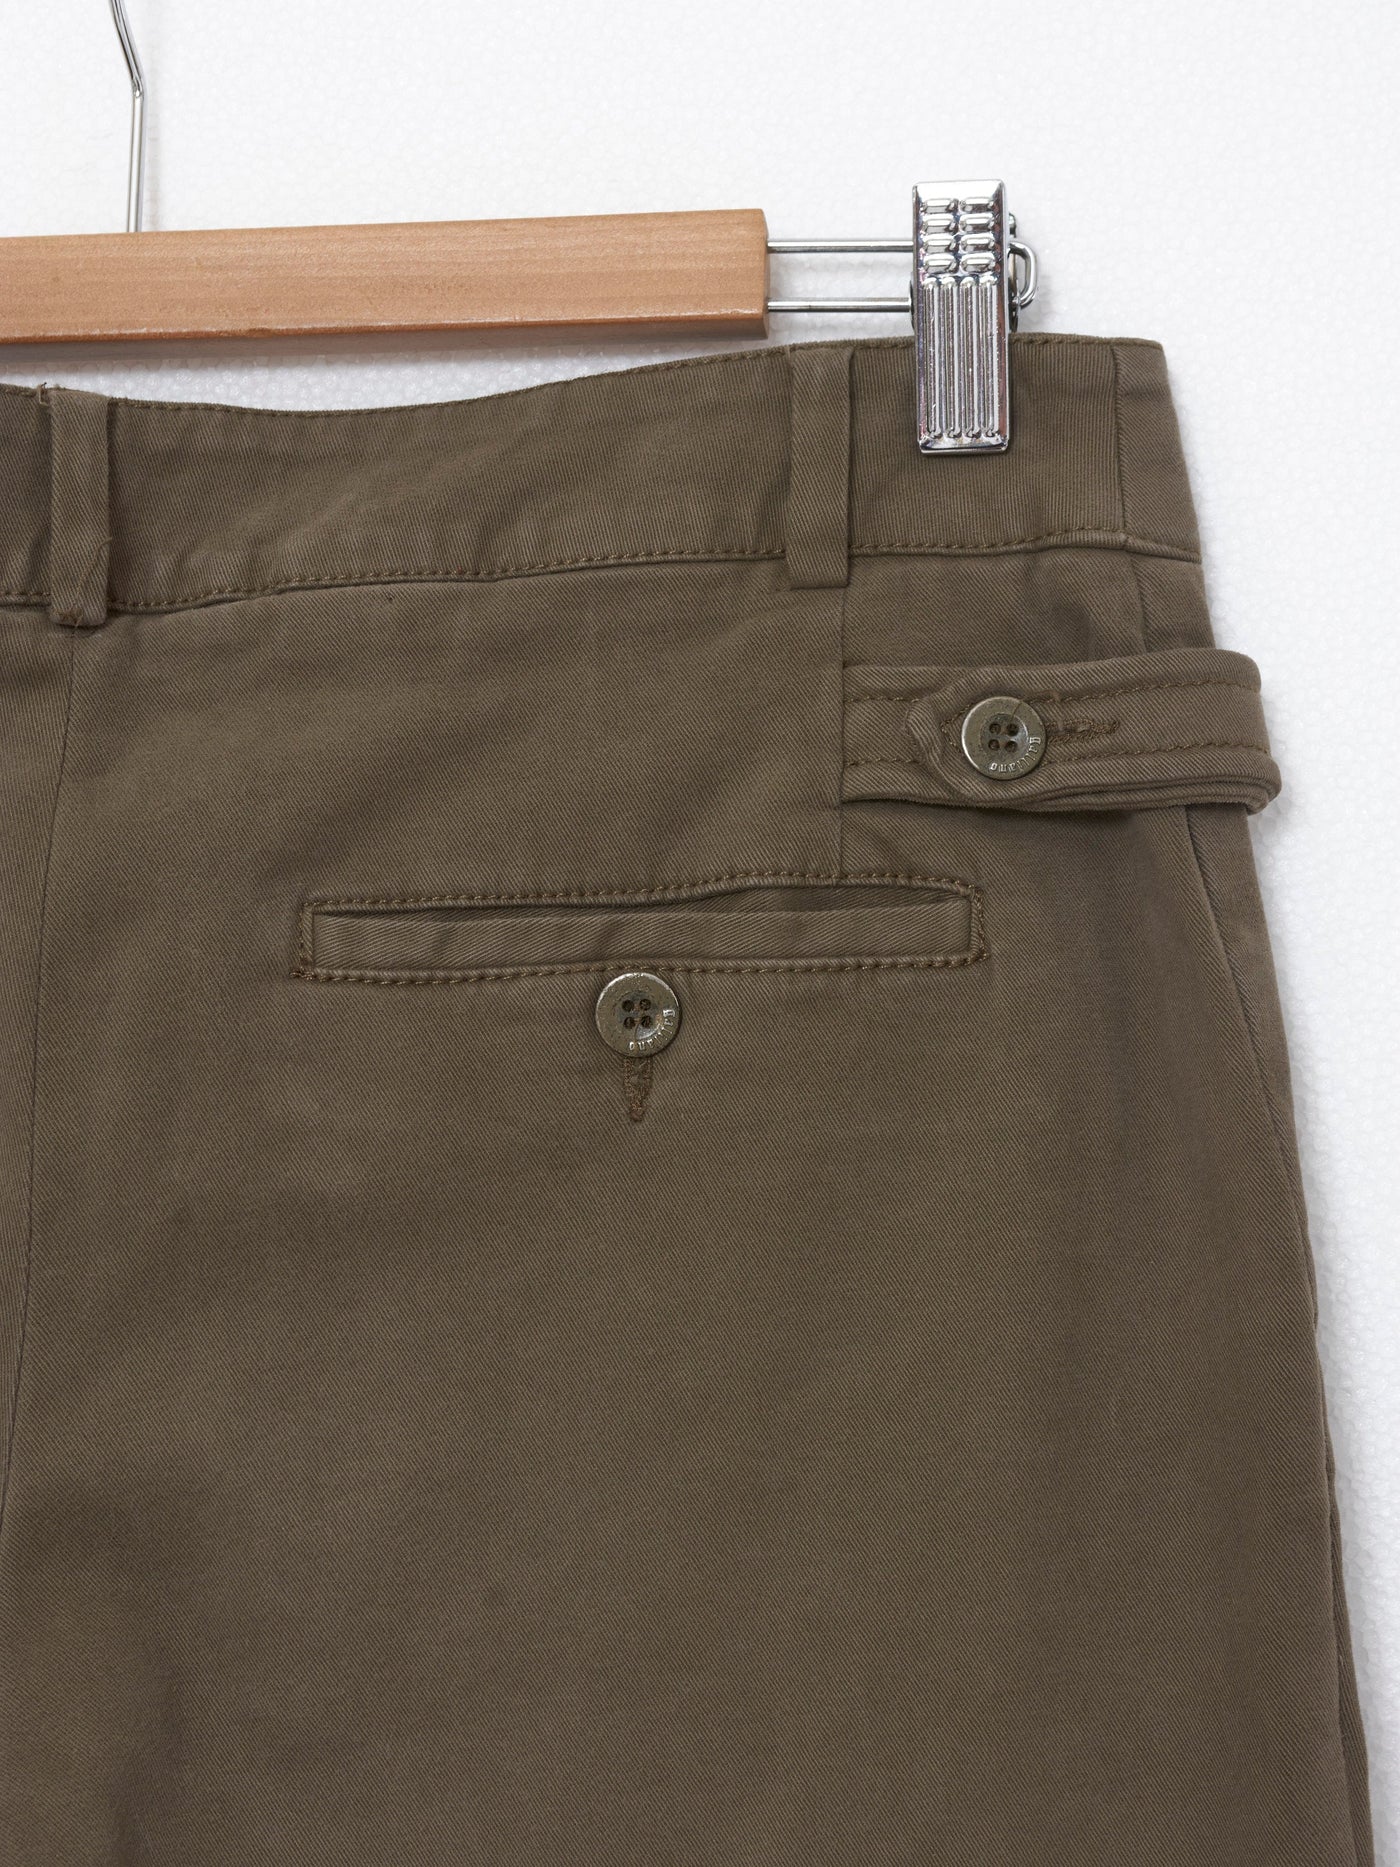 John Galliano pants in military green cotton